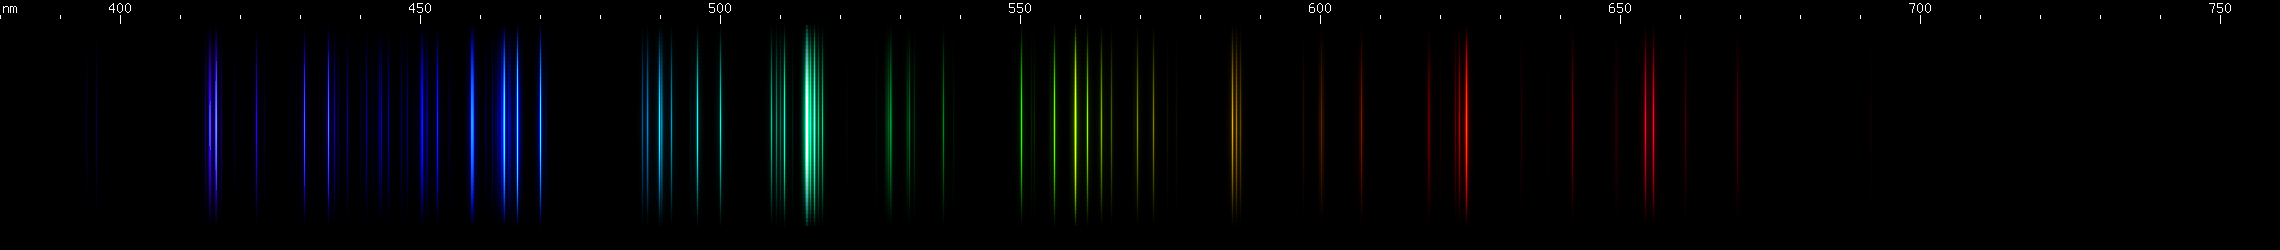 Spectral lines of Aluminum.